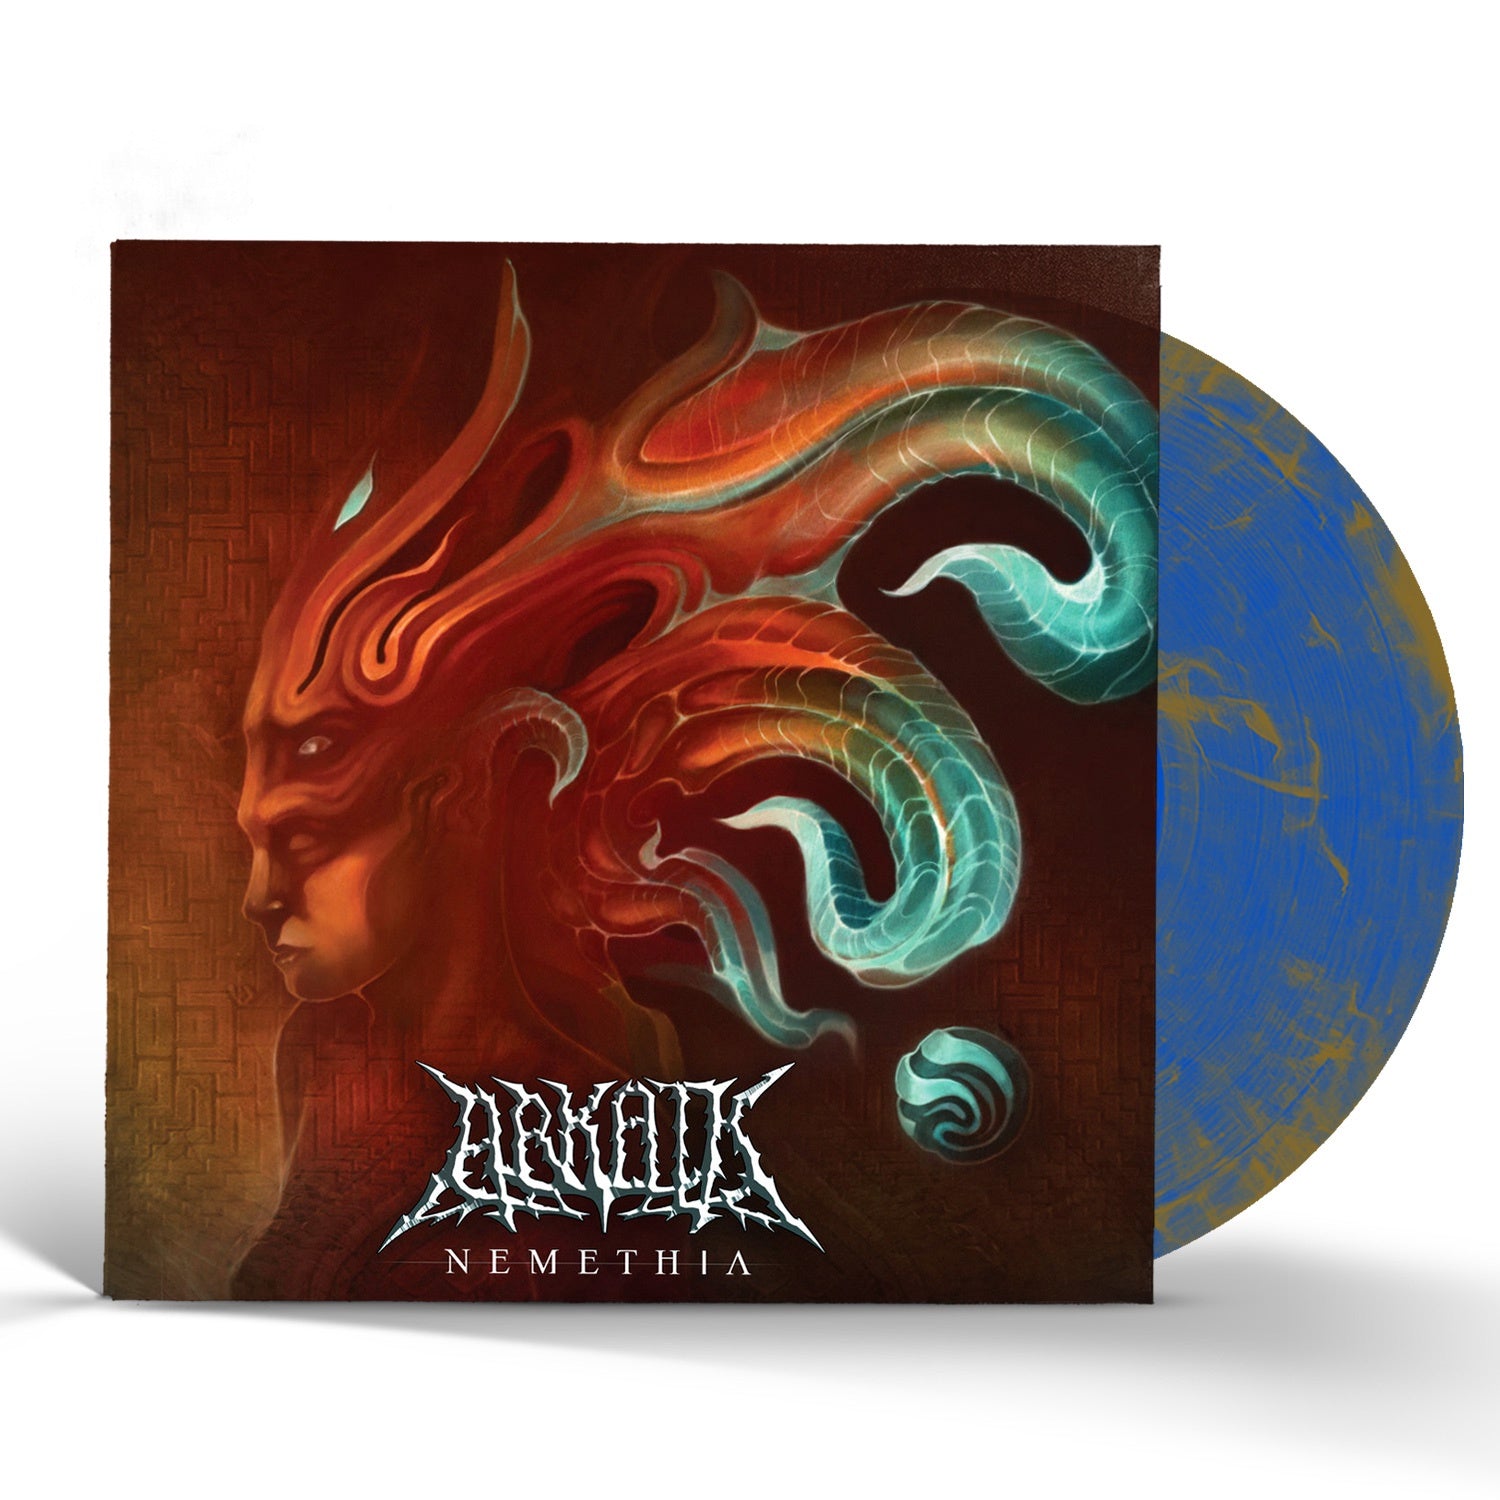 Arkaik - Nemethia - New Vinyl Record 2017 Unique Leader Records Pressing on Colored Vinyl with Download - Prog / Tech Metal